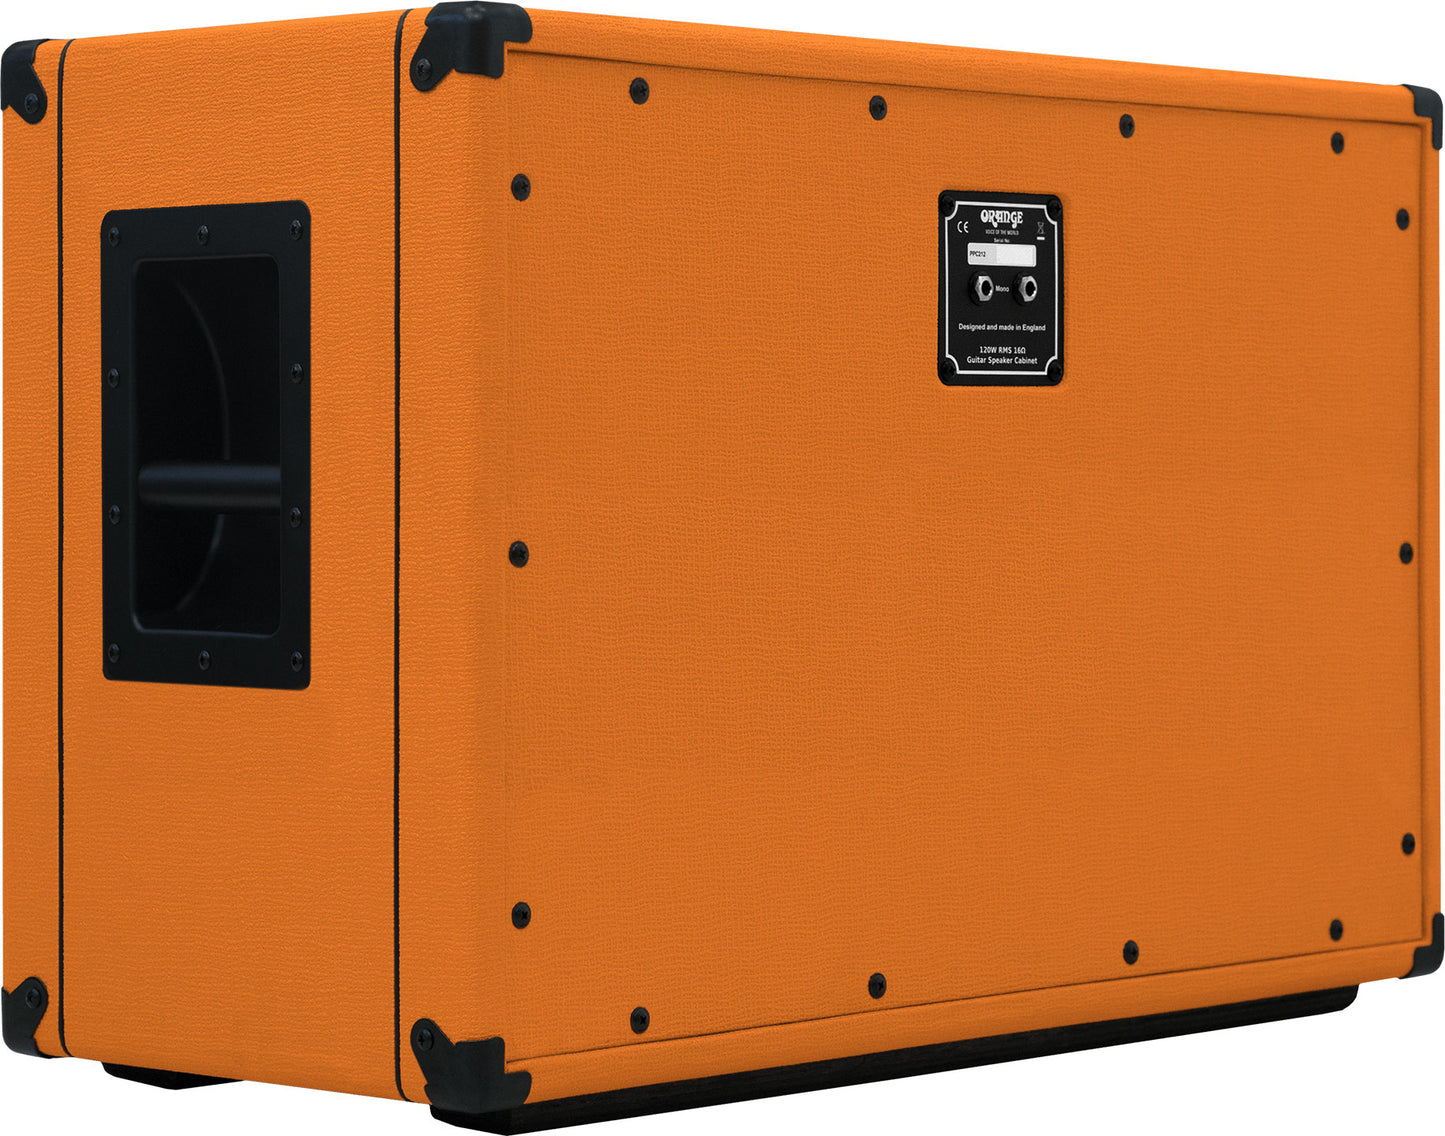 Orange PPC212 Closed Back 2x12 Speaker Cabinet